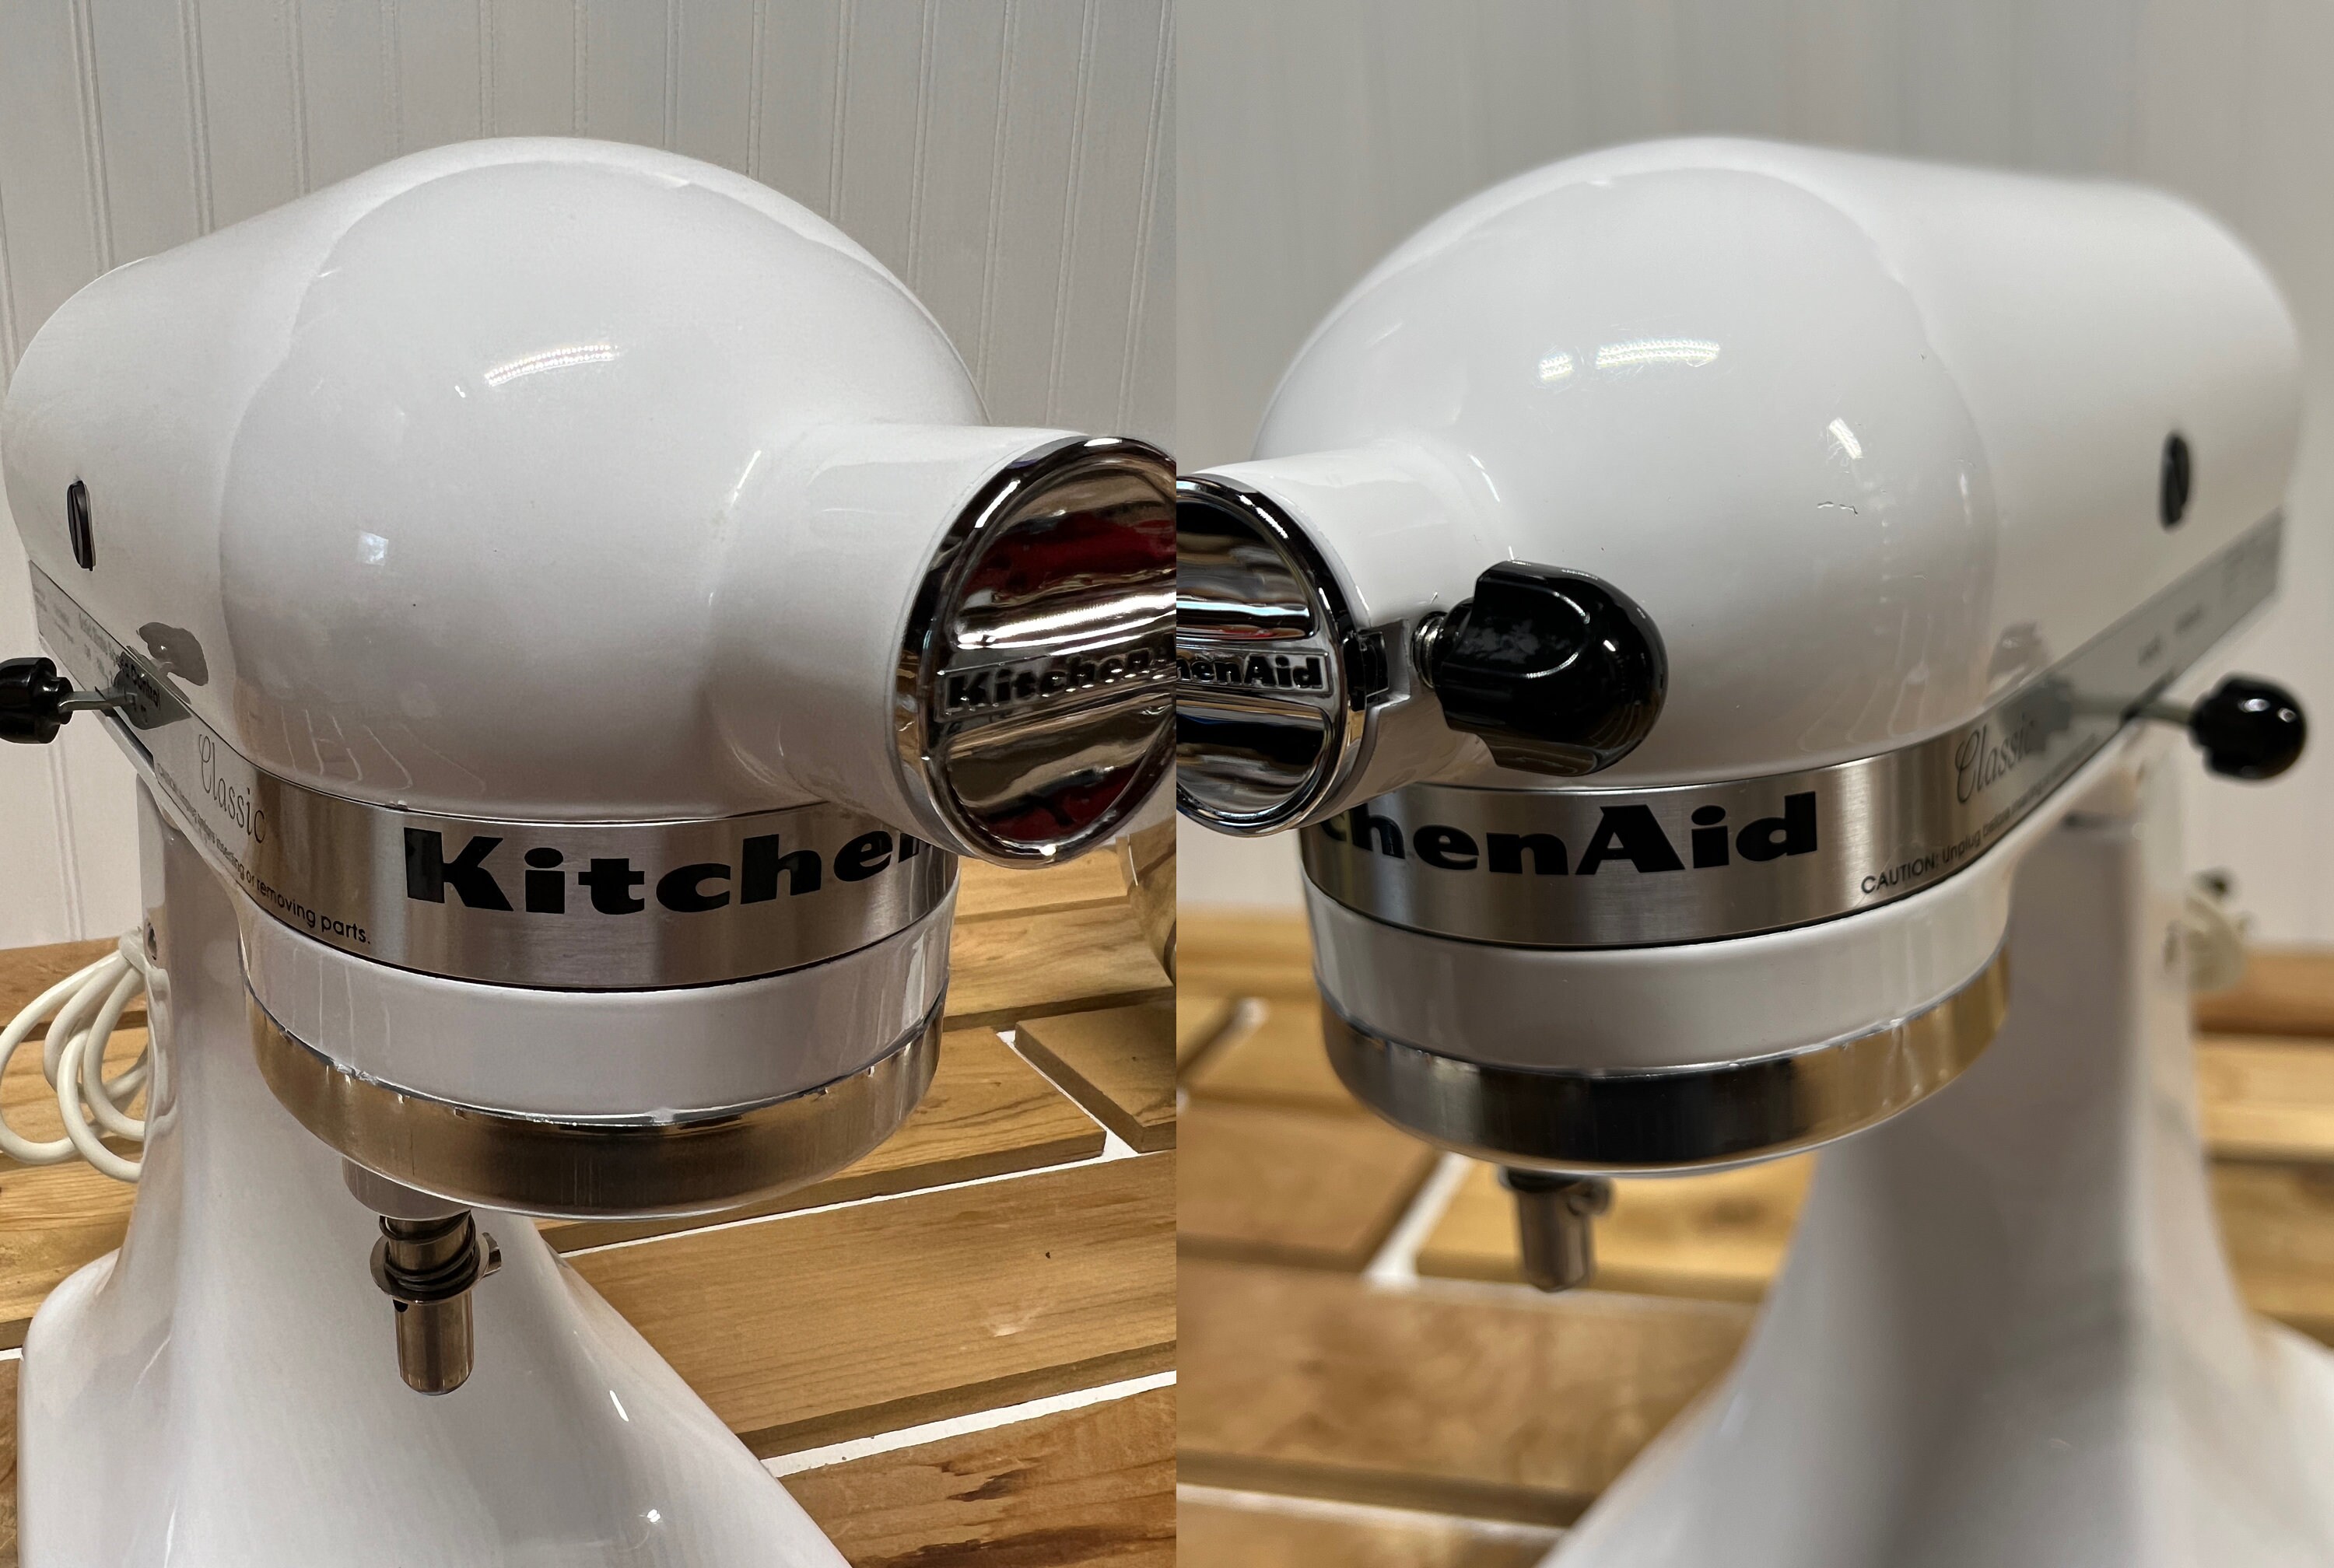 KitchenAid Classic (250 watt) K45SS[WH] Mixer Review - Consumer